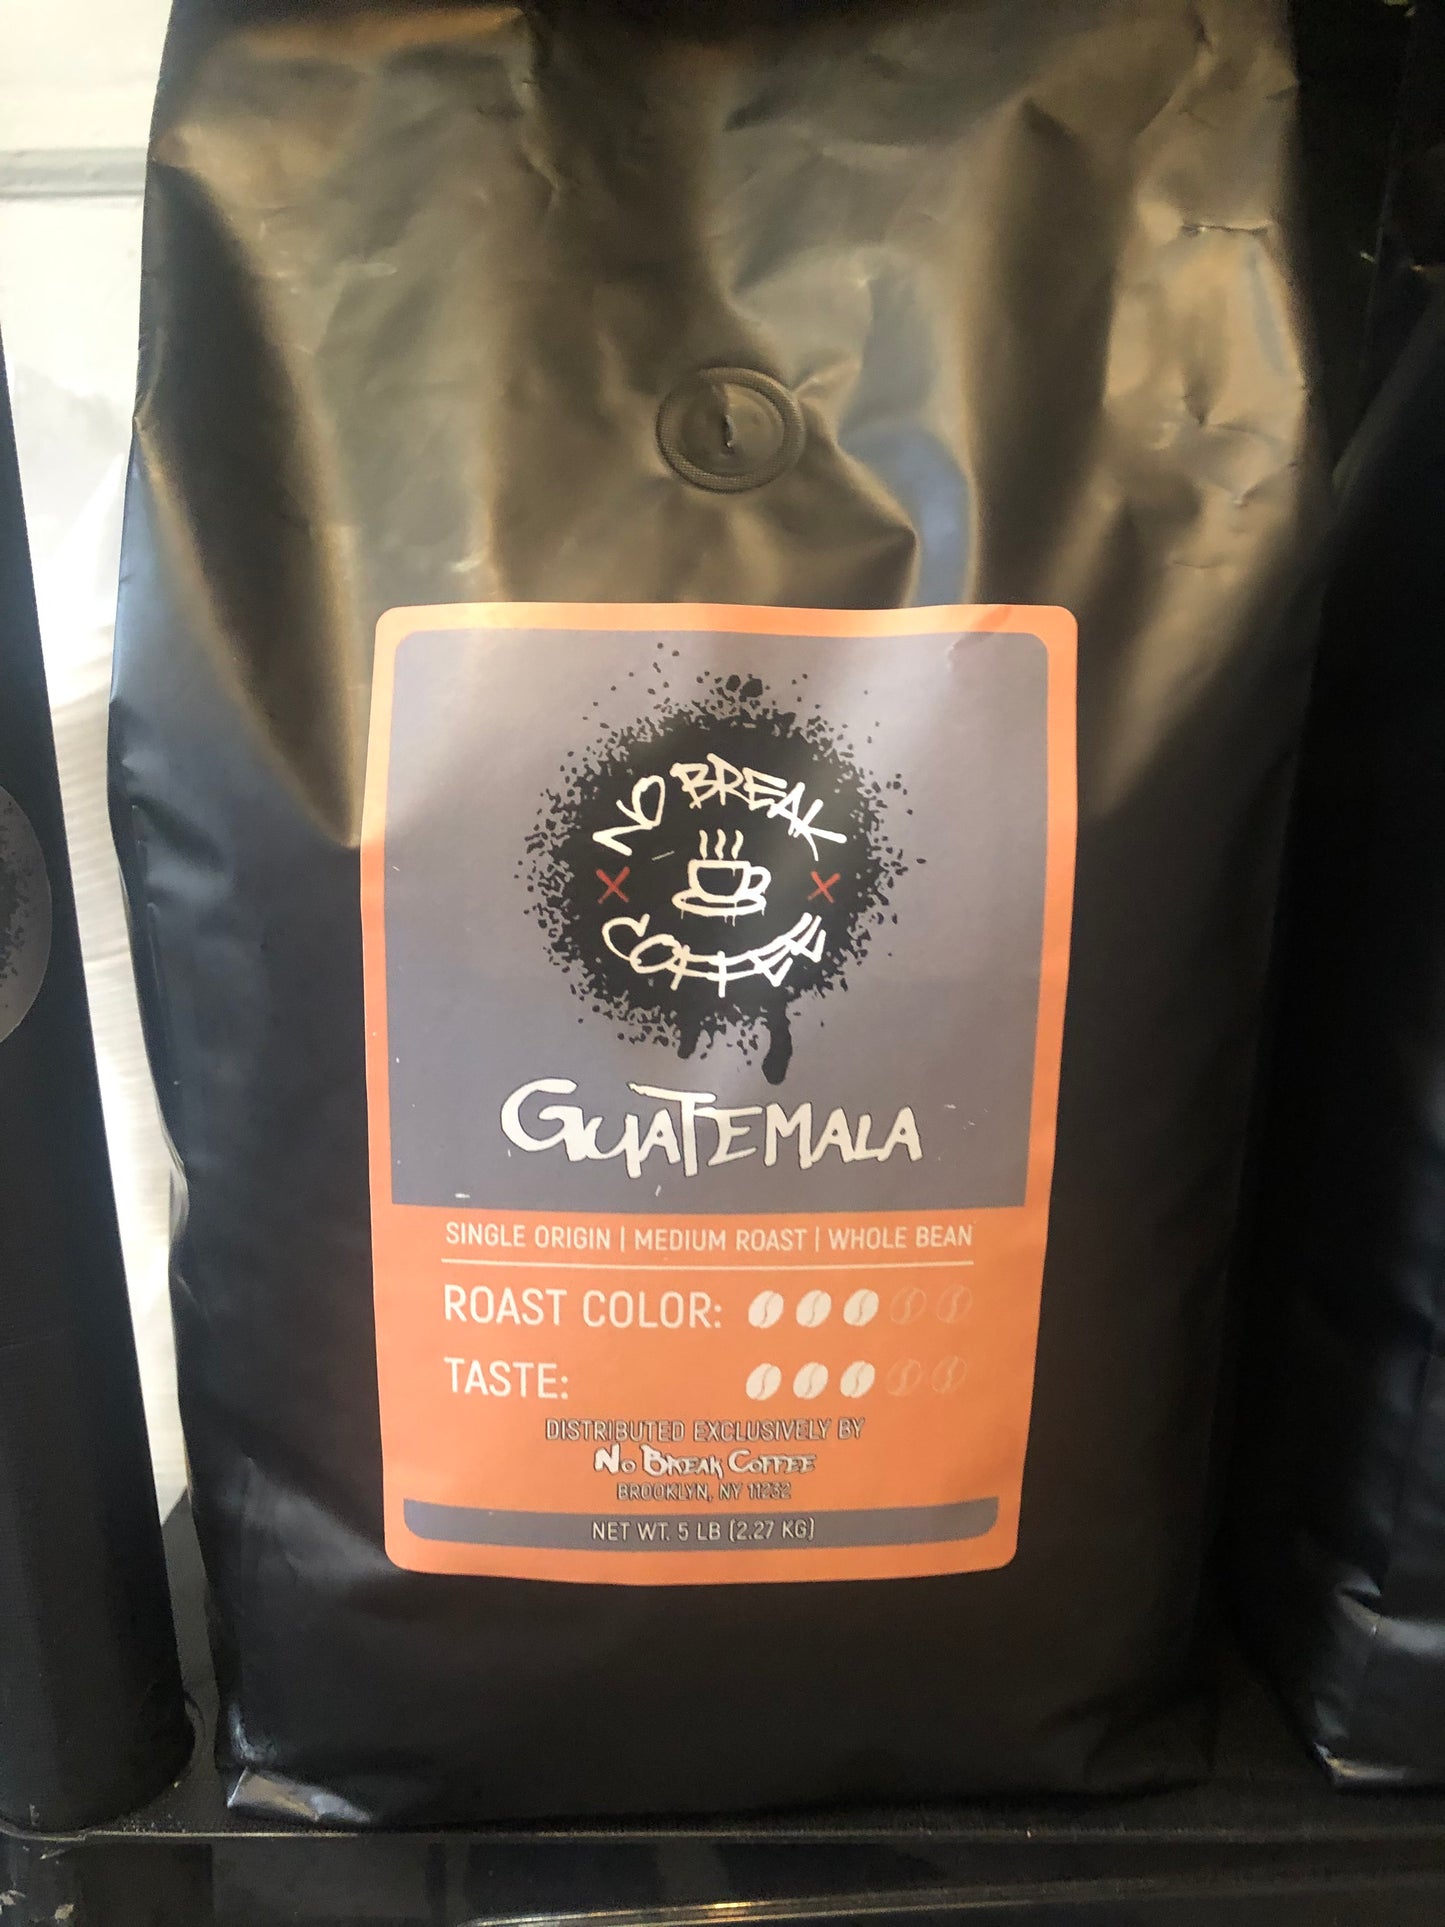 16 OZ Guatemala Antigua Coffee Ground(20%off father day sale to June 18)